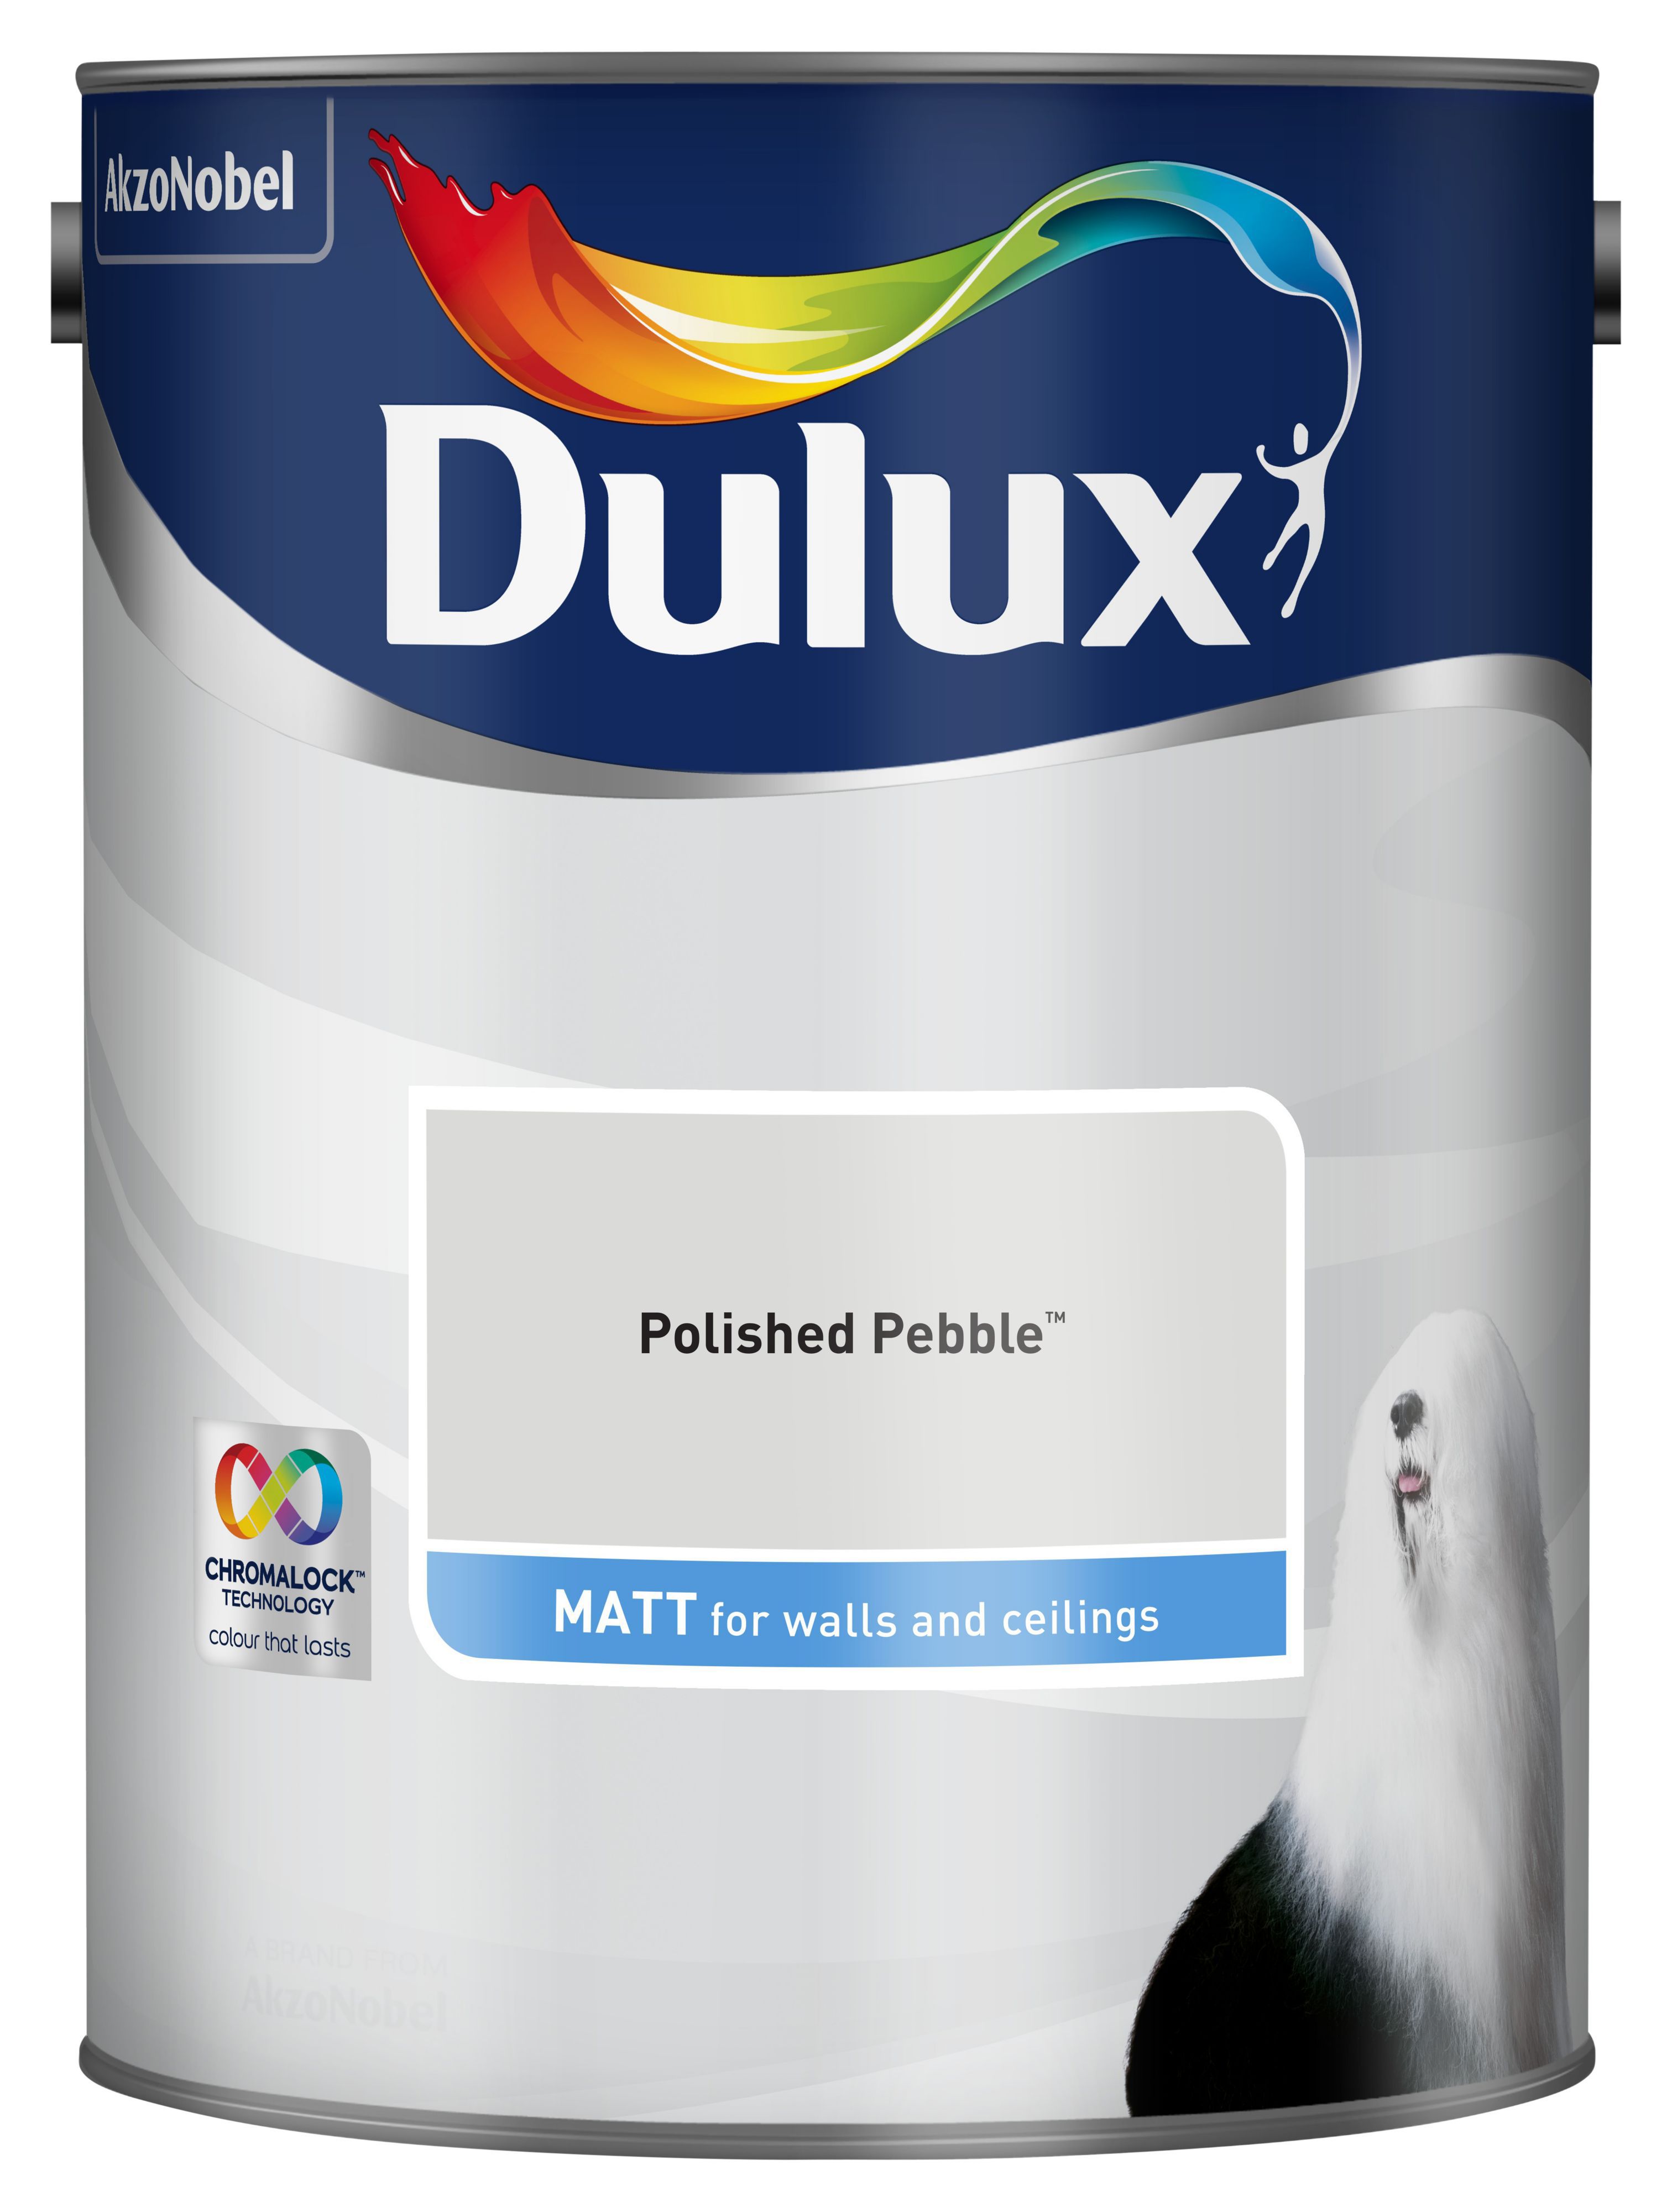 Dulux Polished Pebble Matt Emulsion Paint 5l Departments Diy At B Q